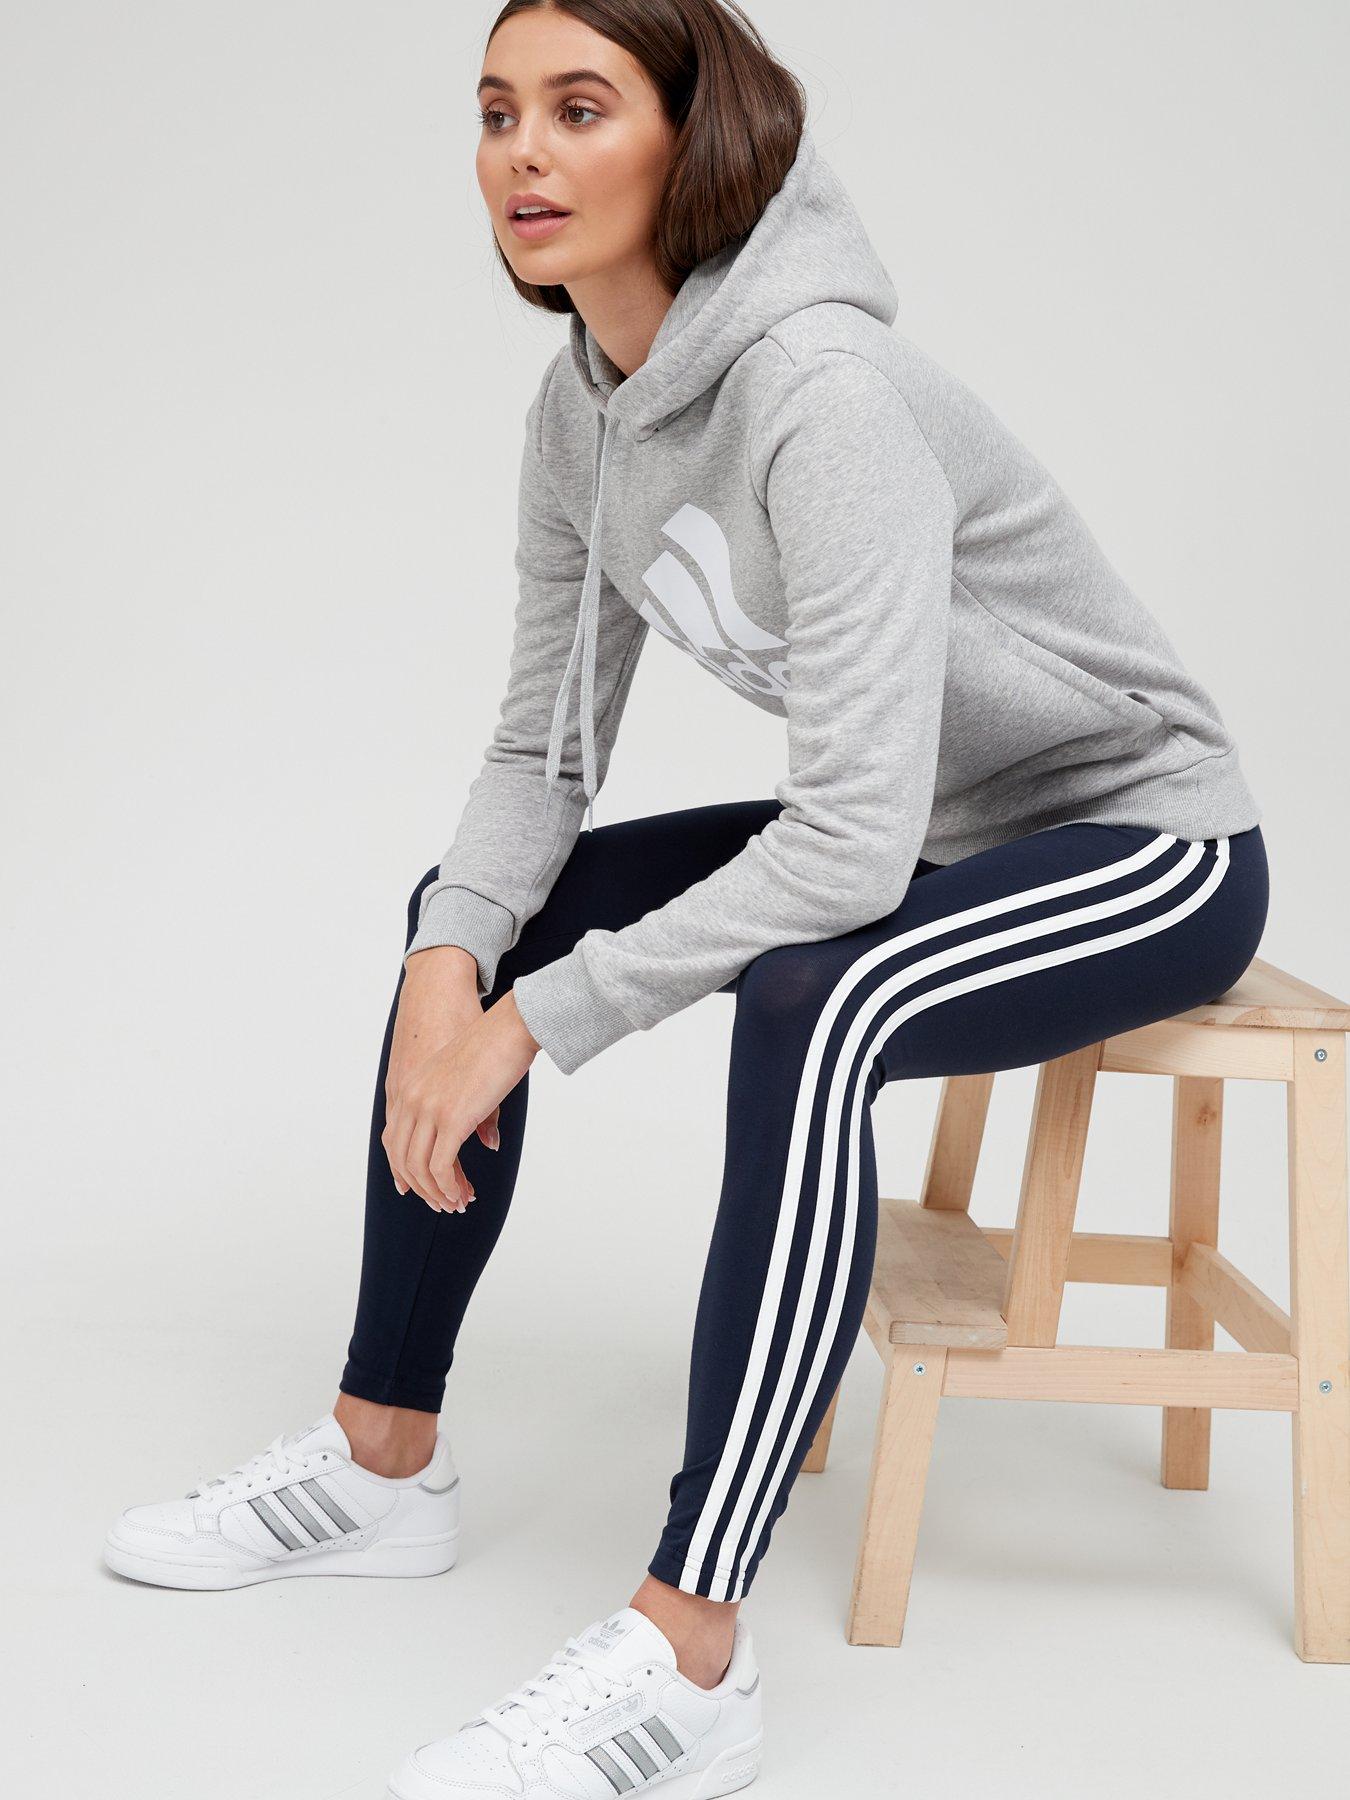 Adidas Women’s Trefoil & 3 Stripes Leggings Black Grey Size 8 10 12 14